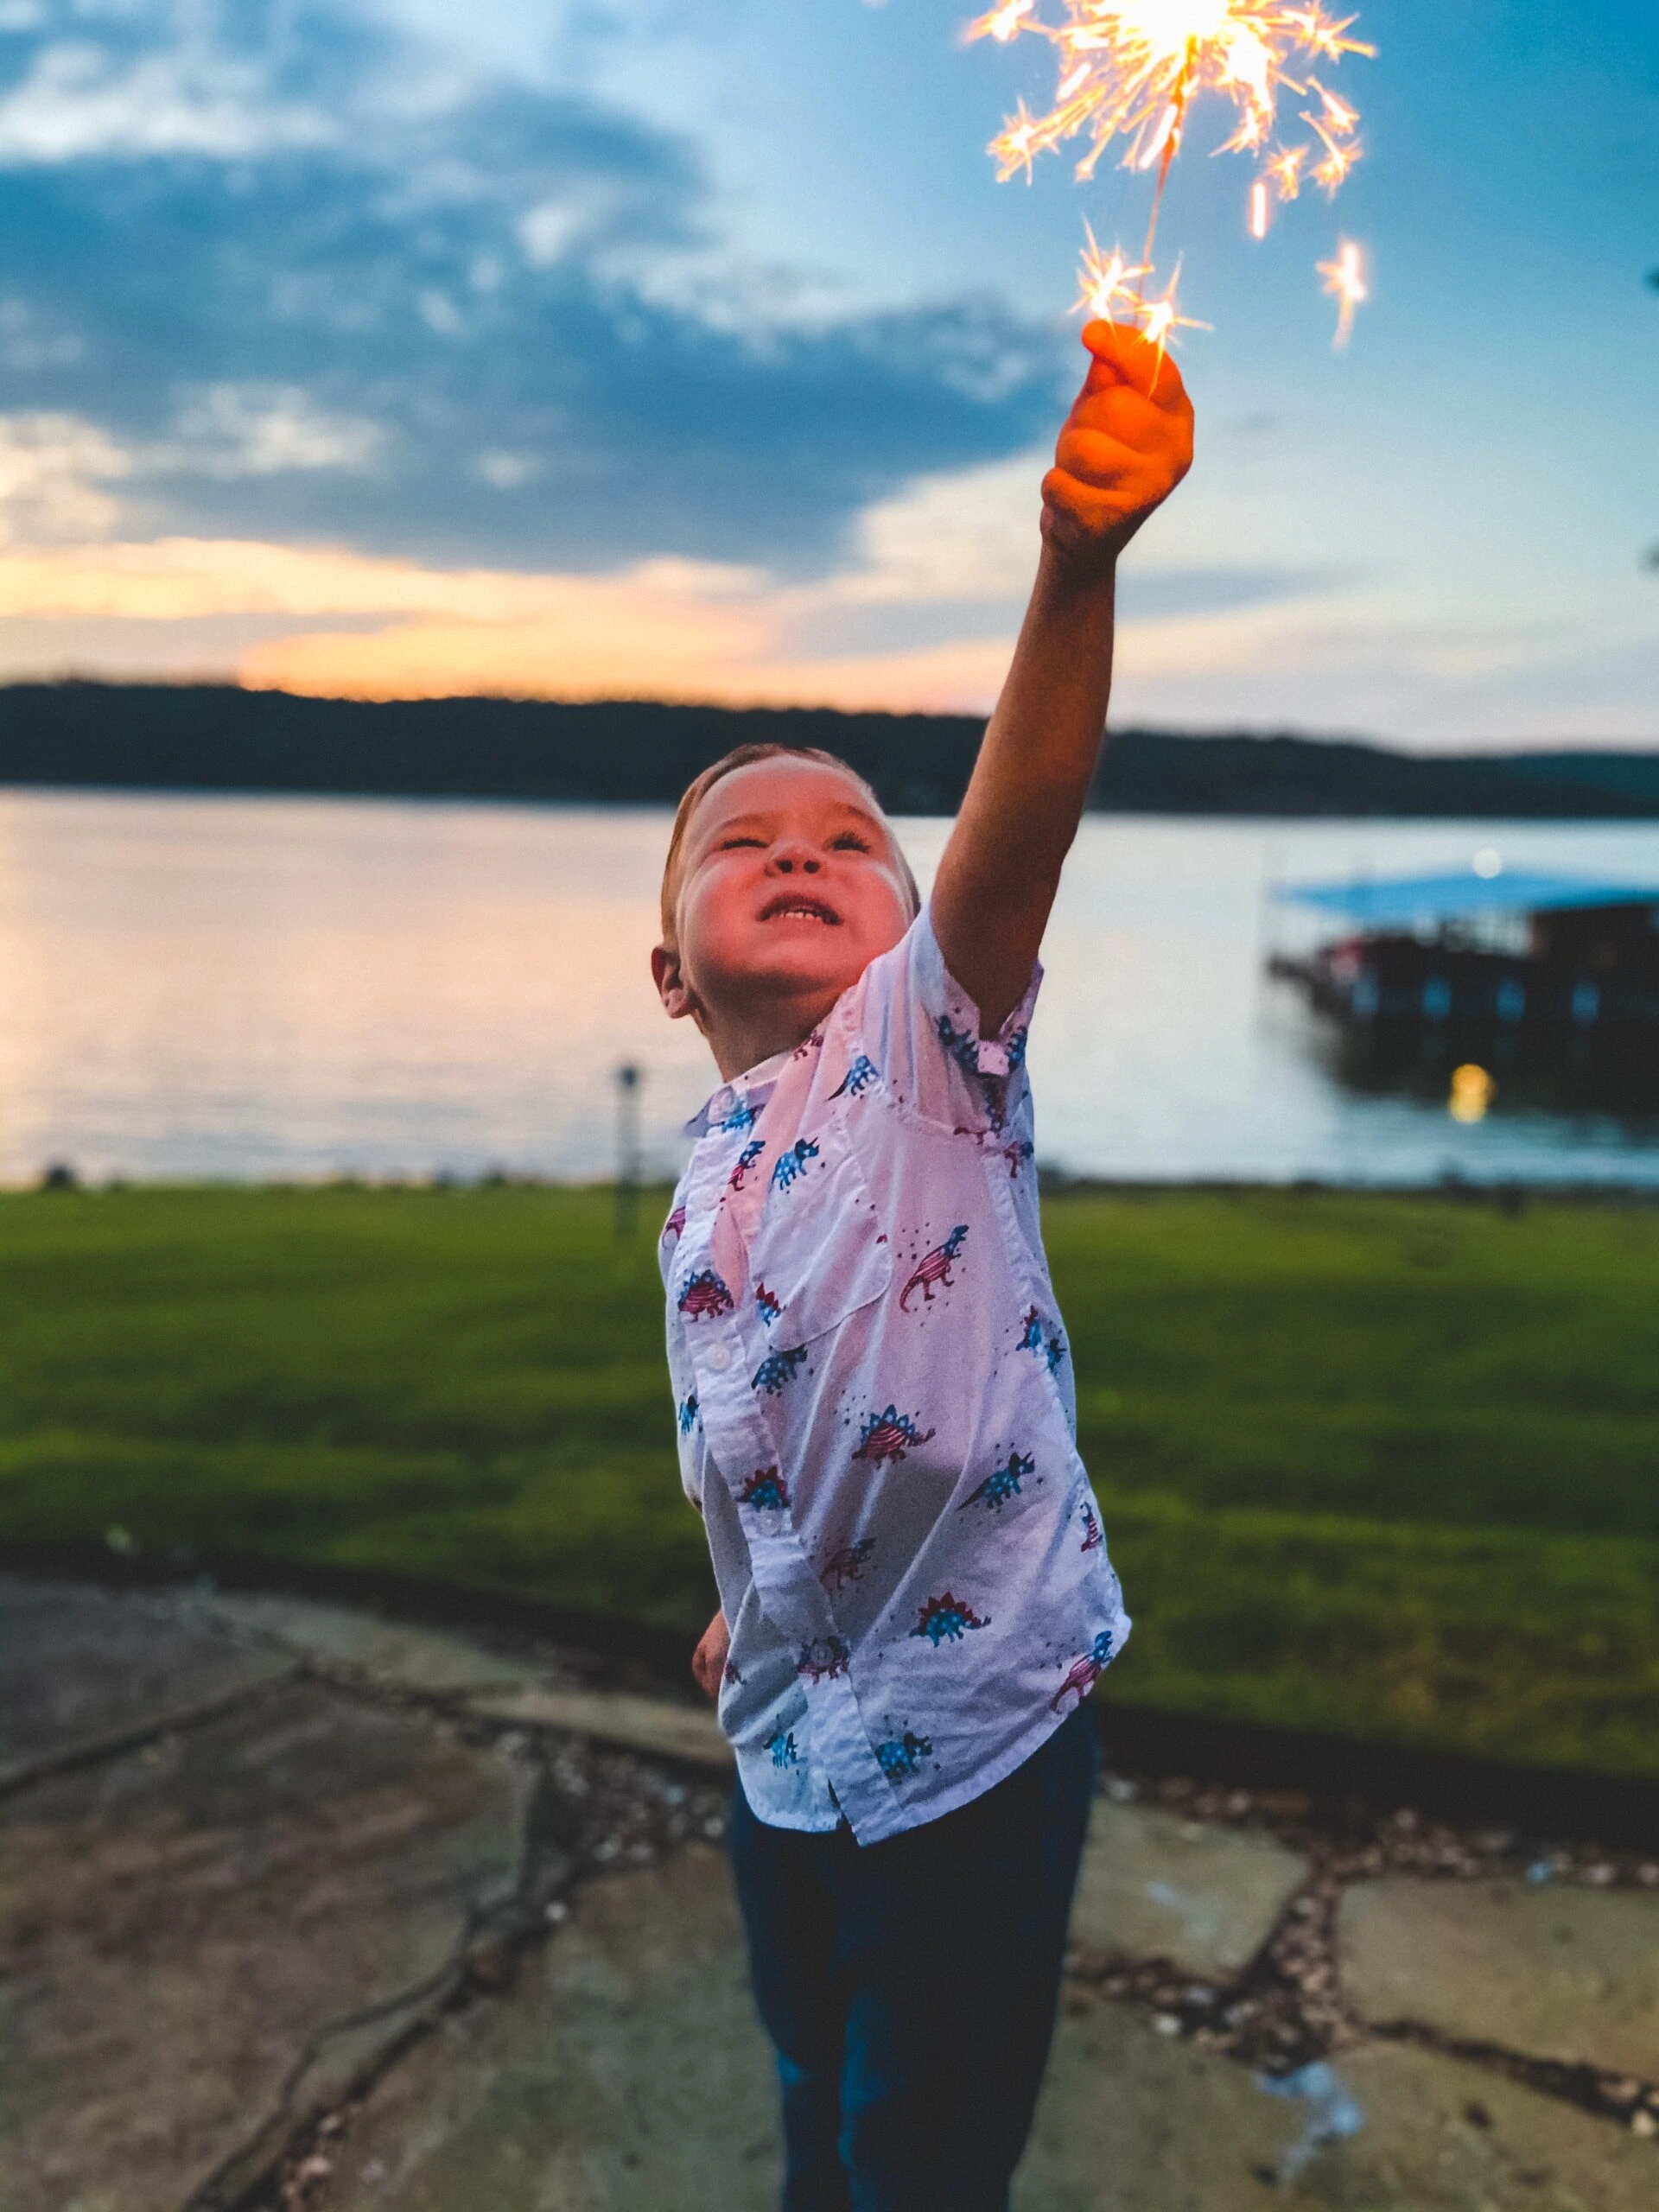 bobby-overturf-Young man holding high a lit sparkler on 4th of July-unsplash